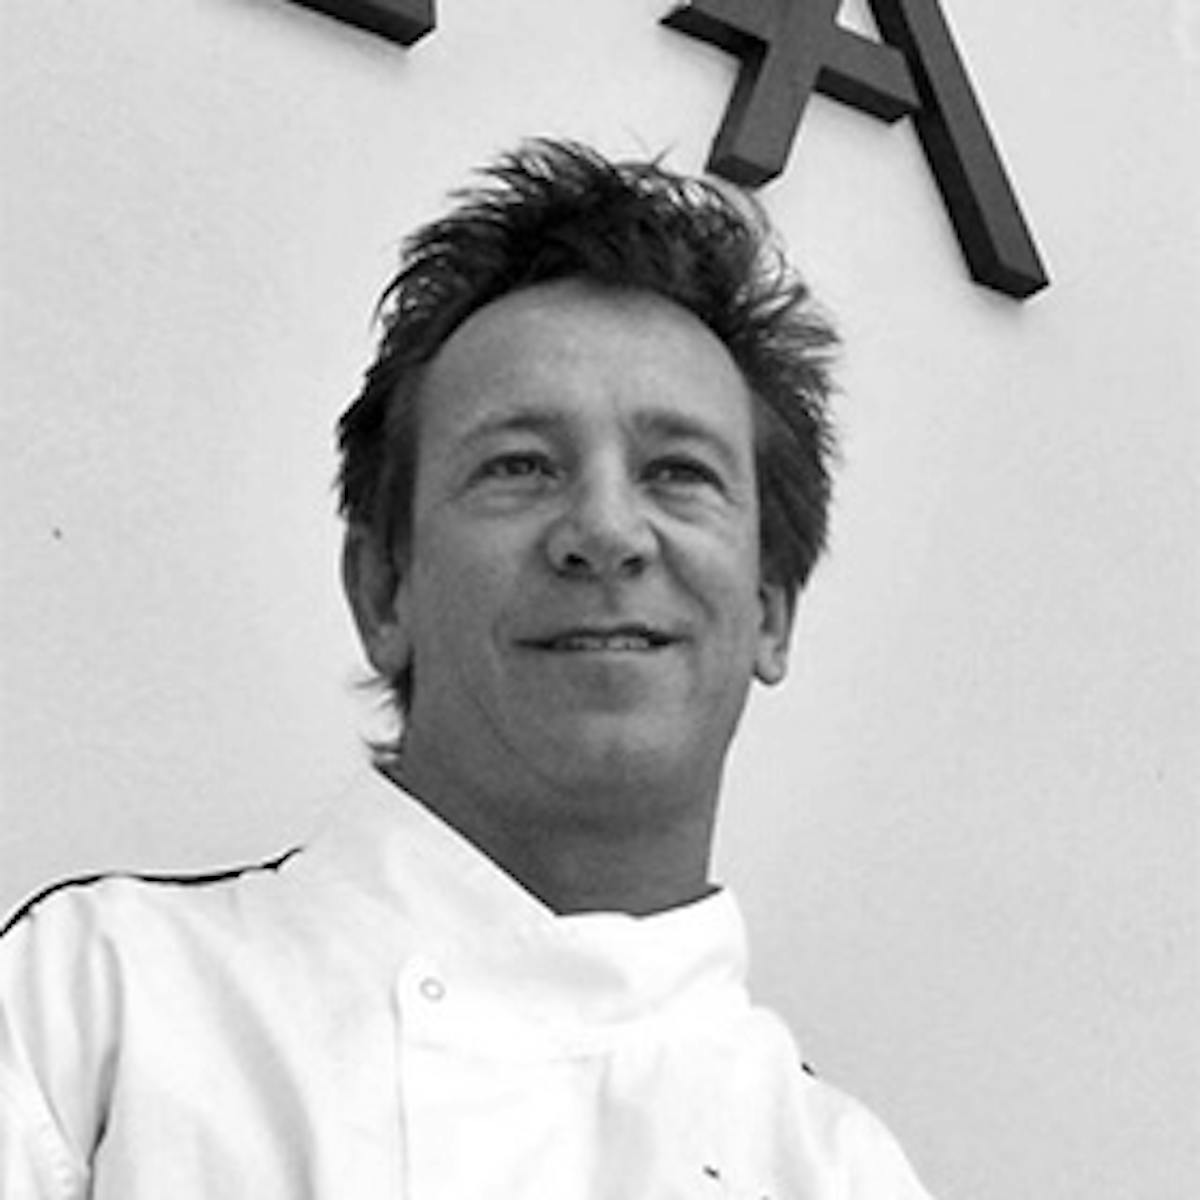 Chef Sean Brasel